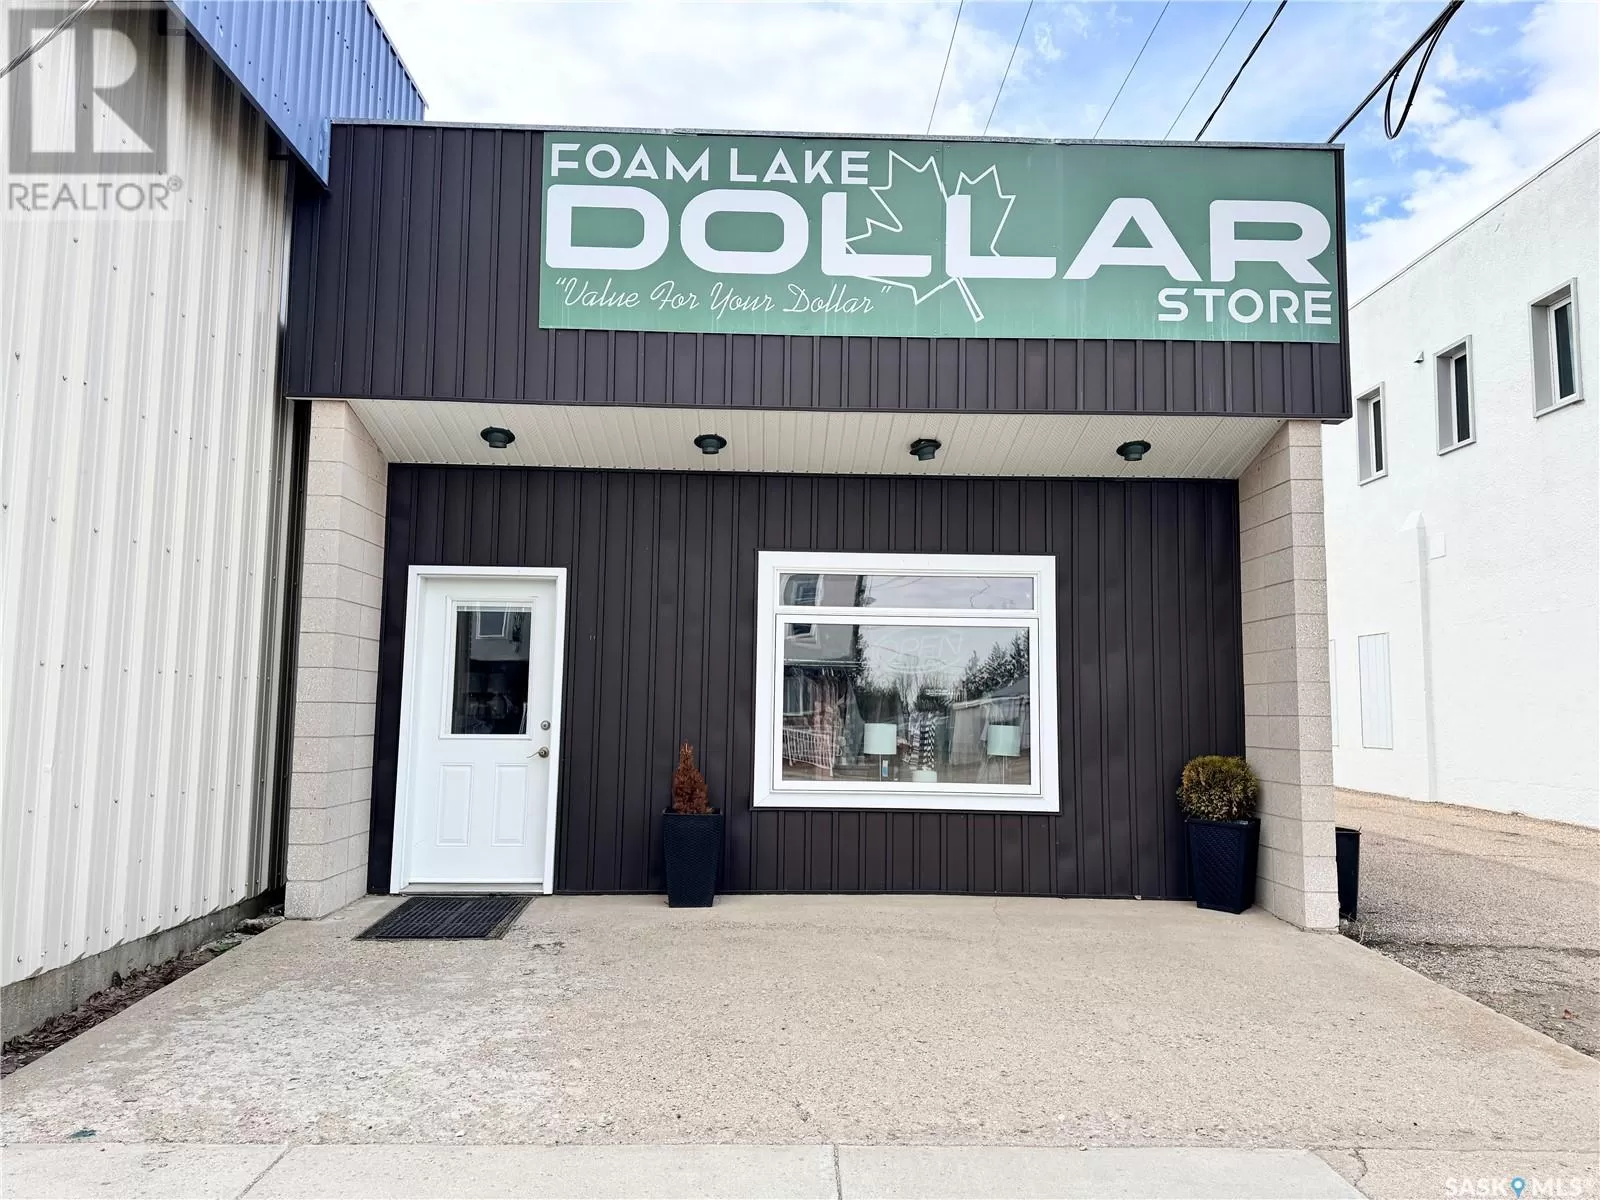 Retail for rent: 428 Main Street, Foam Lake, Saskatchewan S0A 1A0